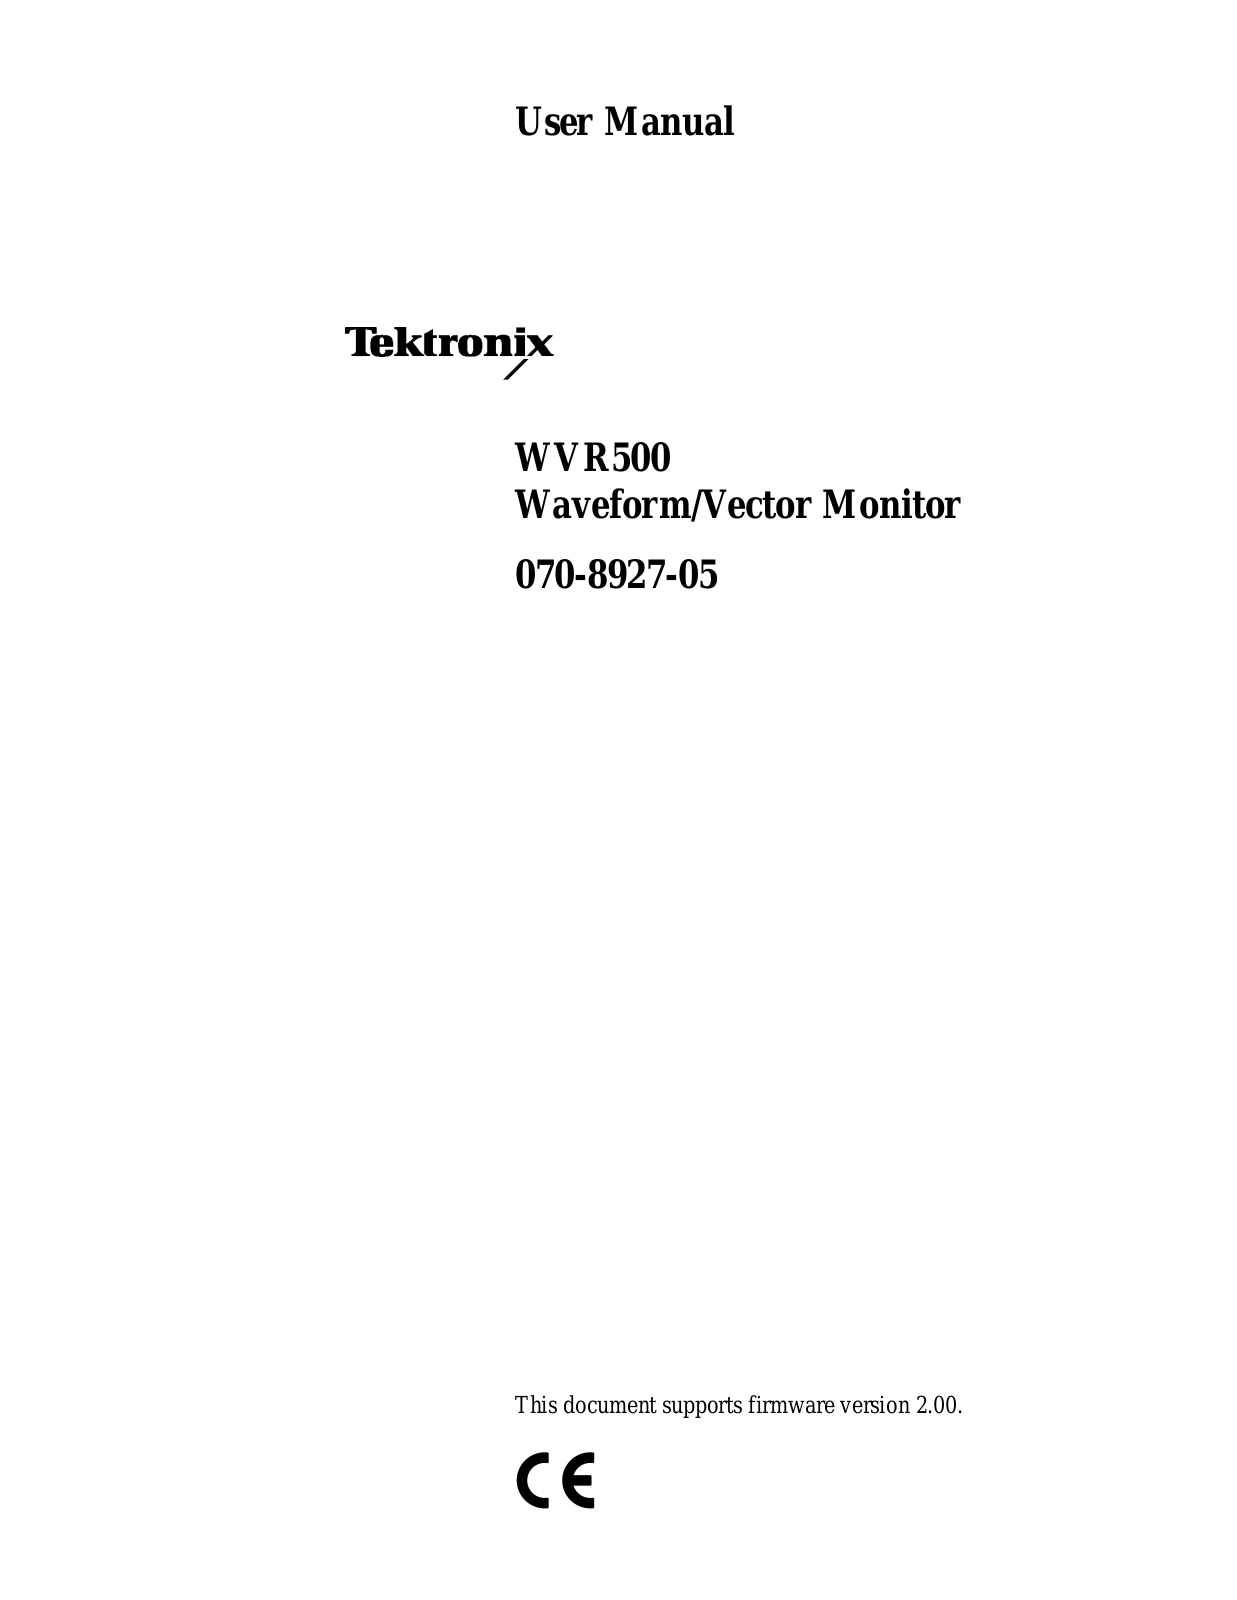 Tektronix WVR500 User Manual